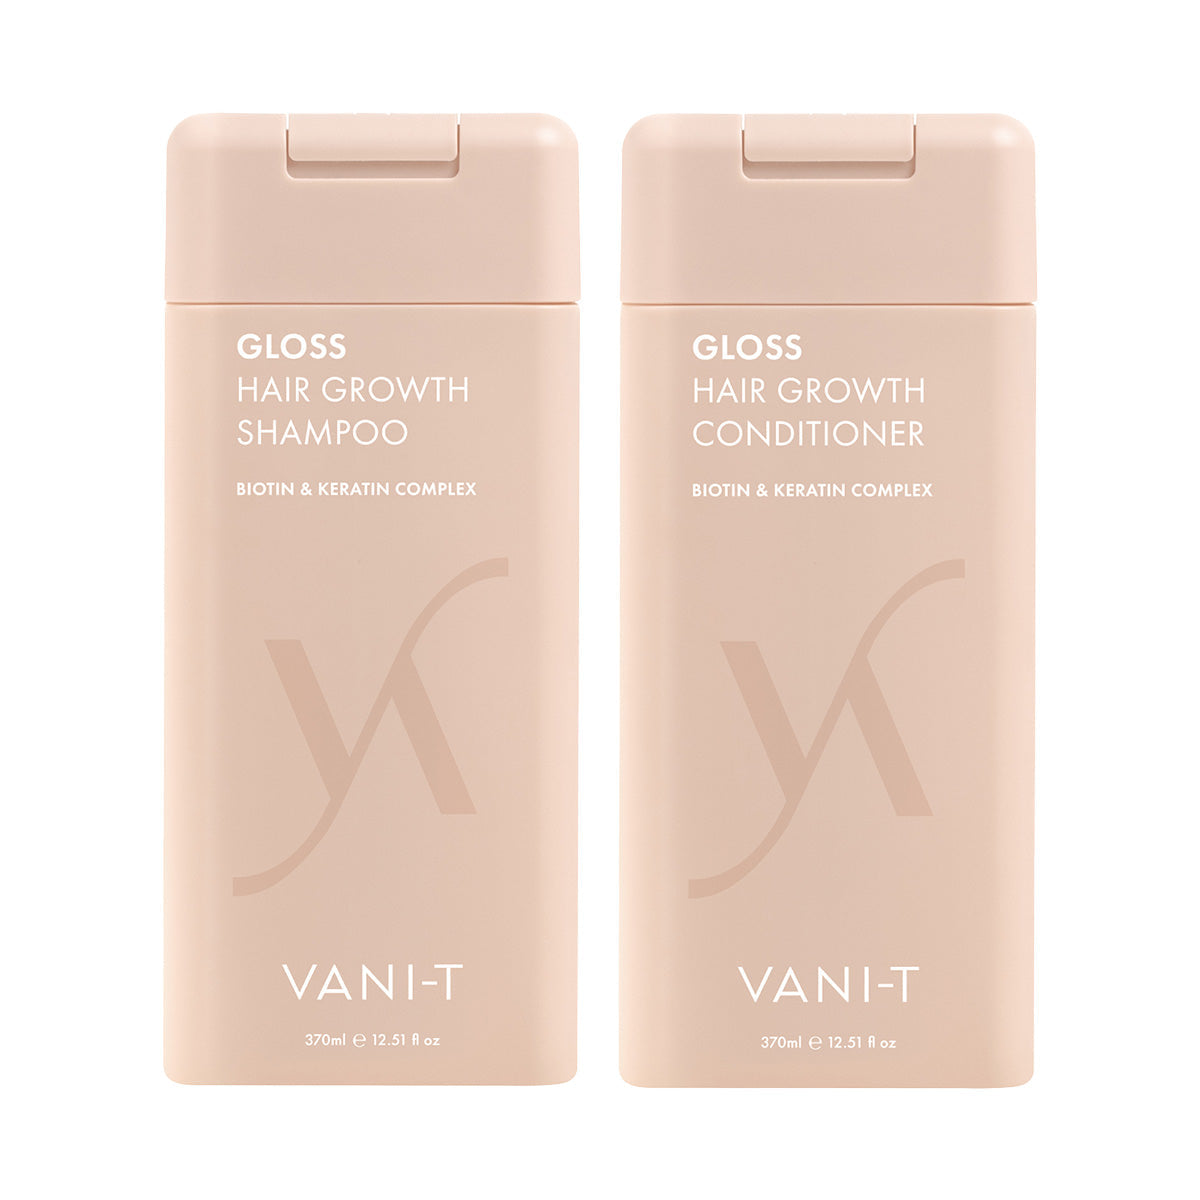 VANI-T Gloss Hair Growth Shampoo & Conditioner Duo 375ml 1